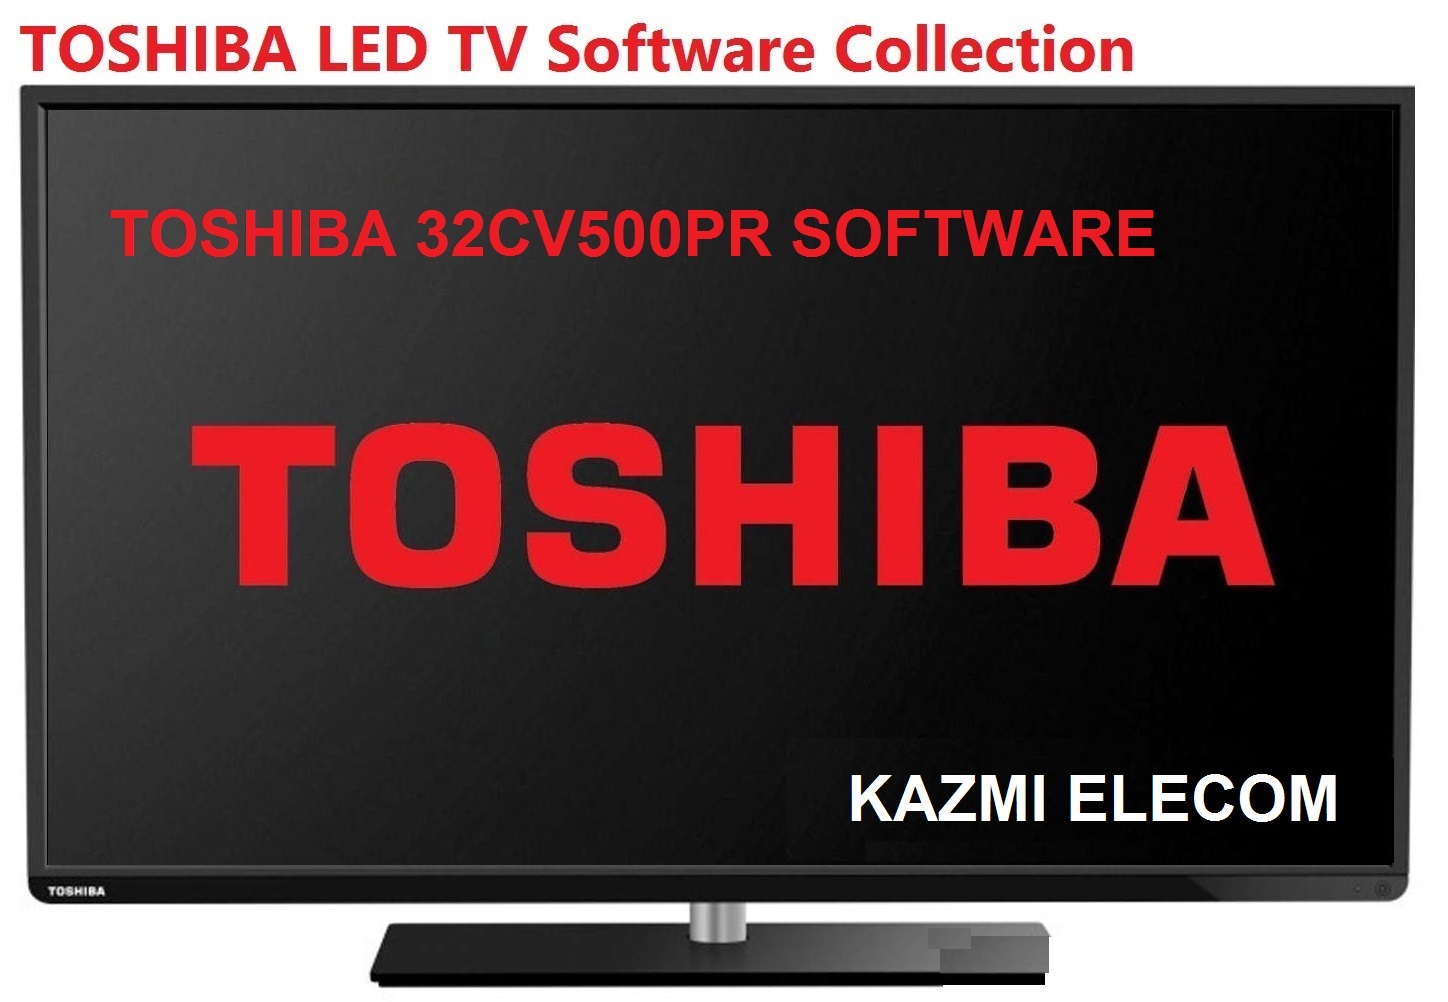 Toshiba 32Cv500Pr